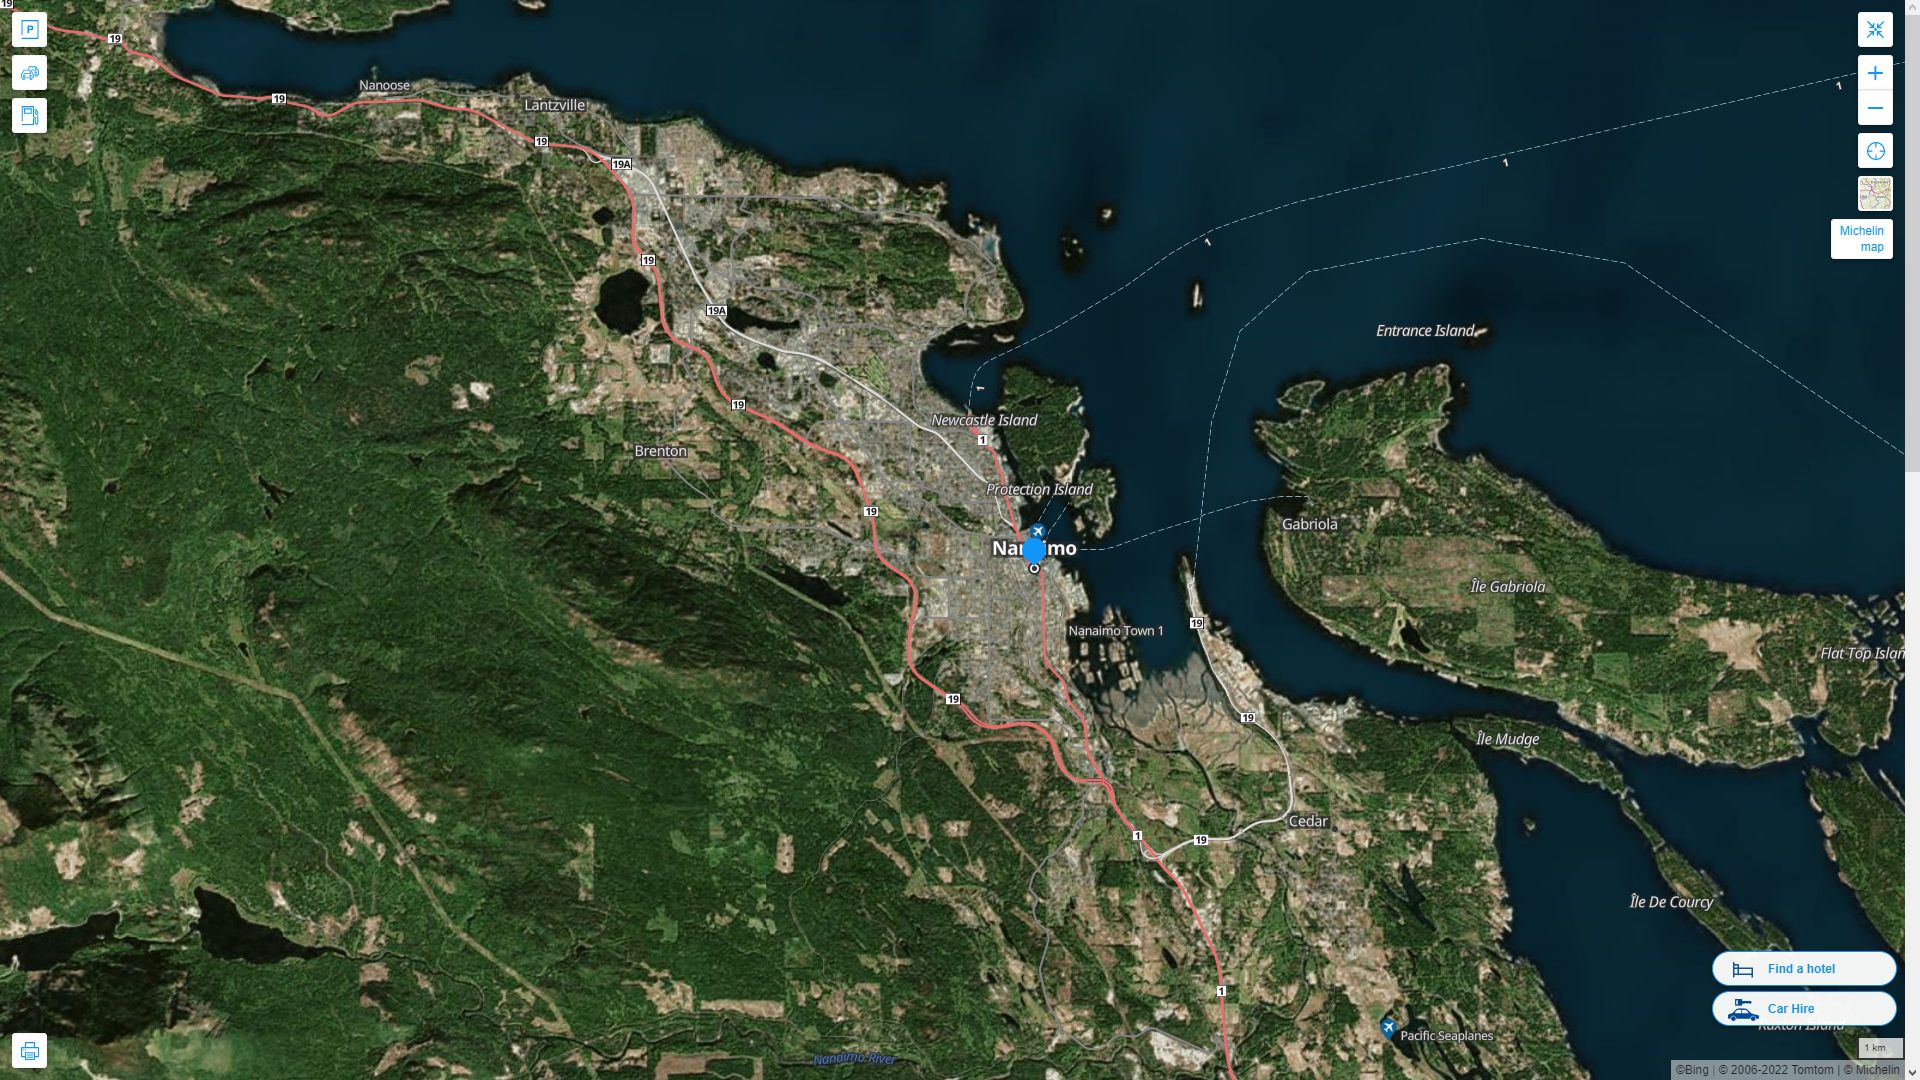 Nanaimo Canada Autoroute et carte routiere avec vue satellite